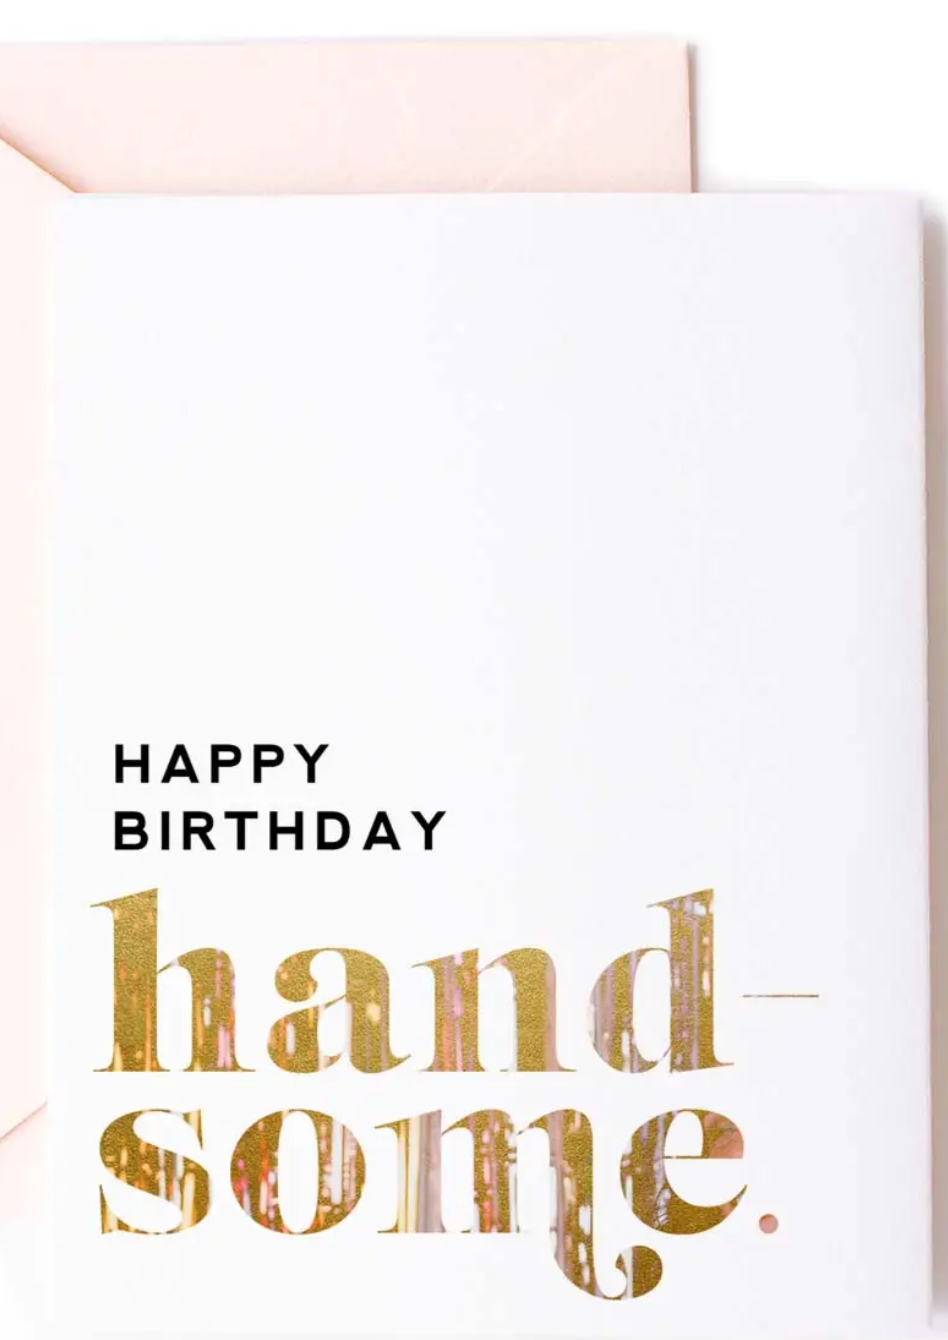 Happy Birthday Handsome Card